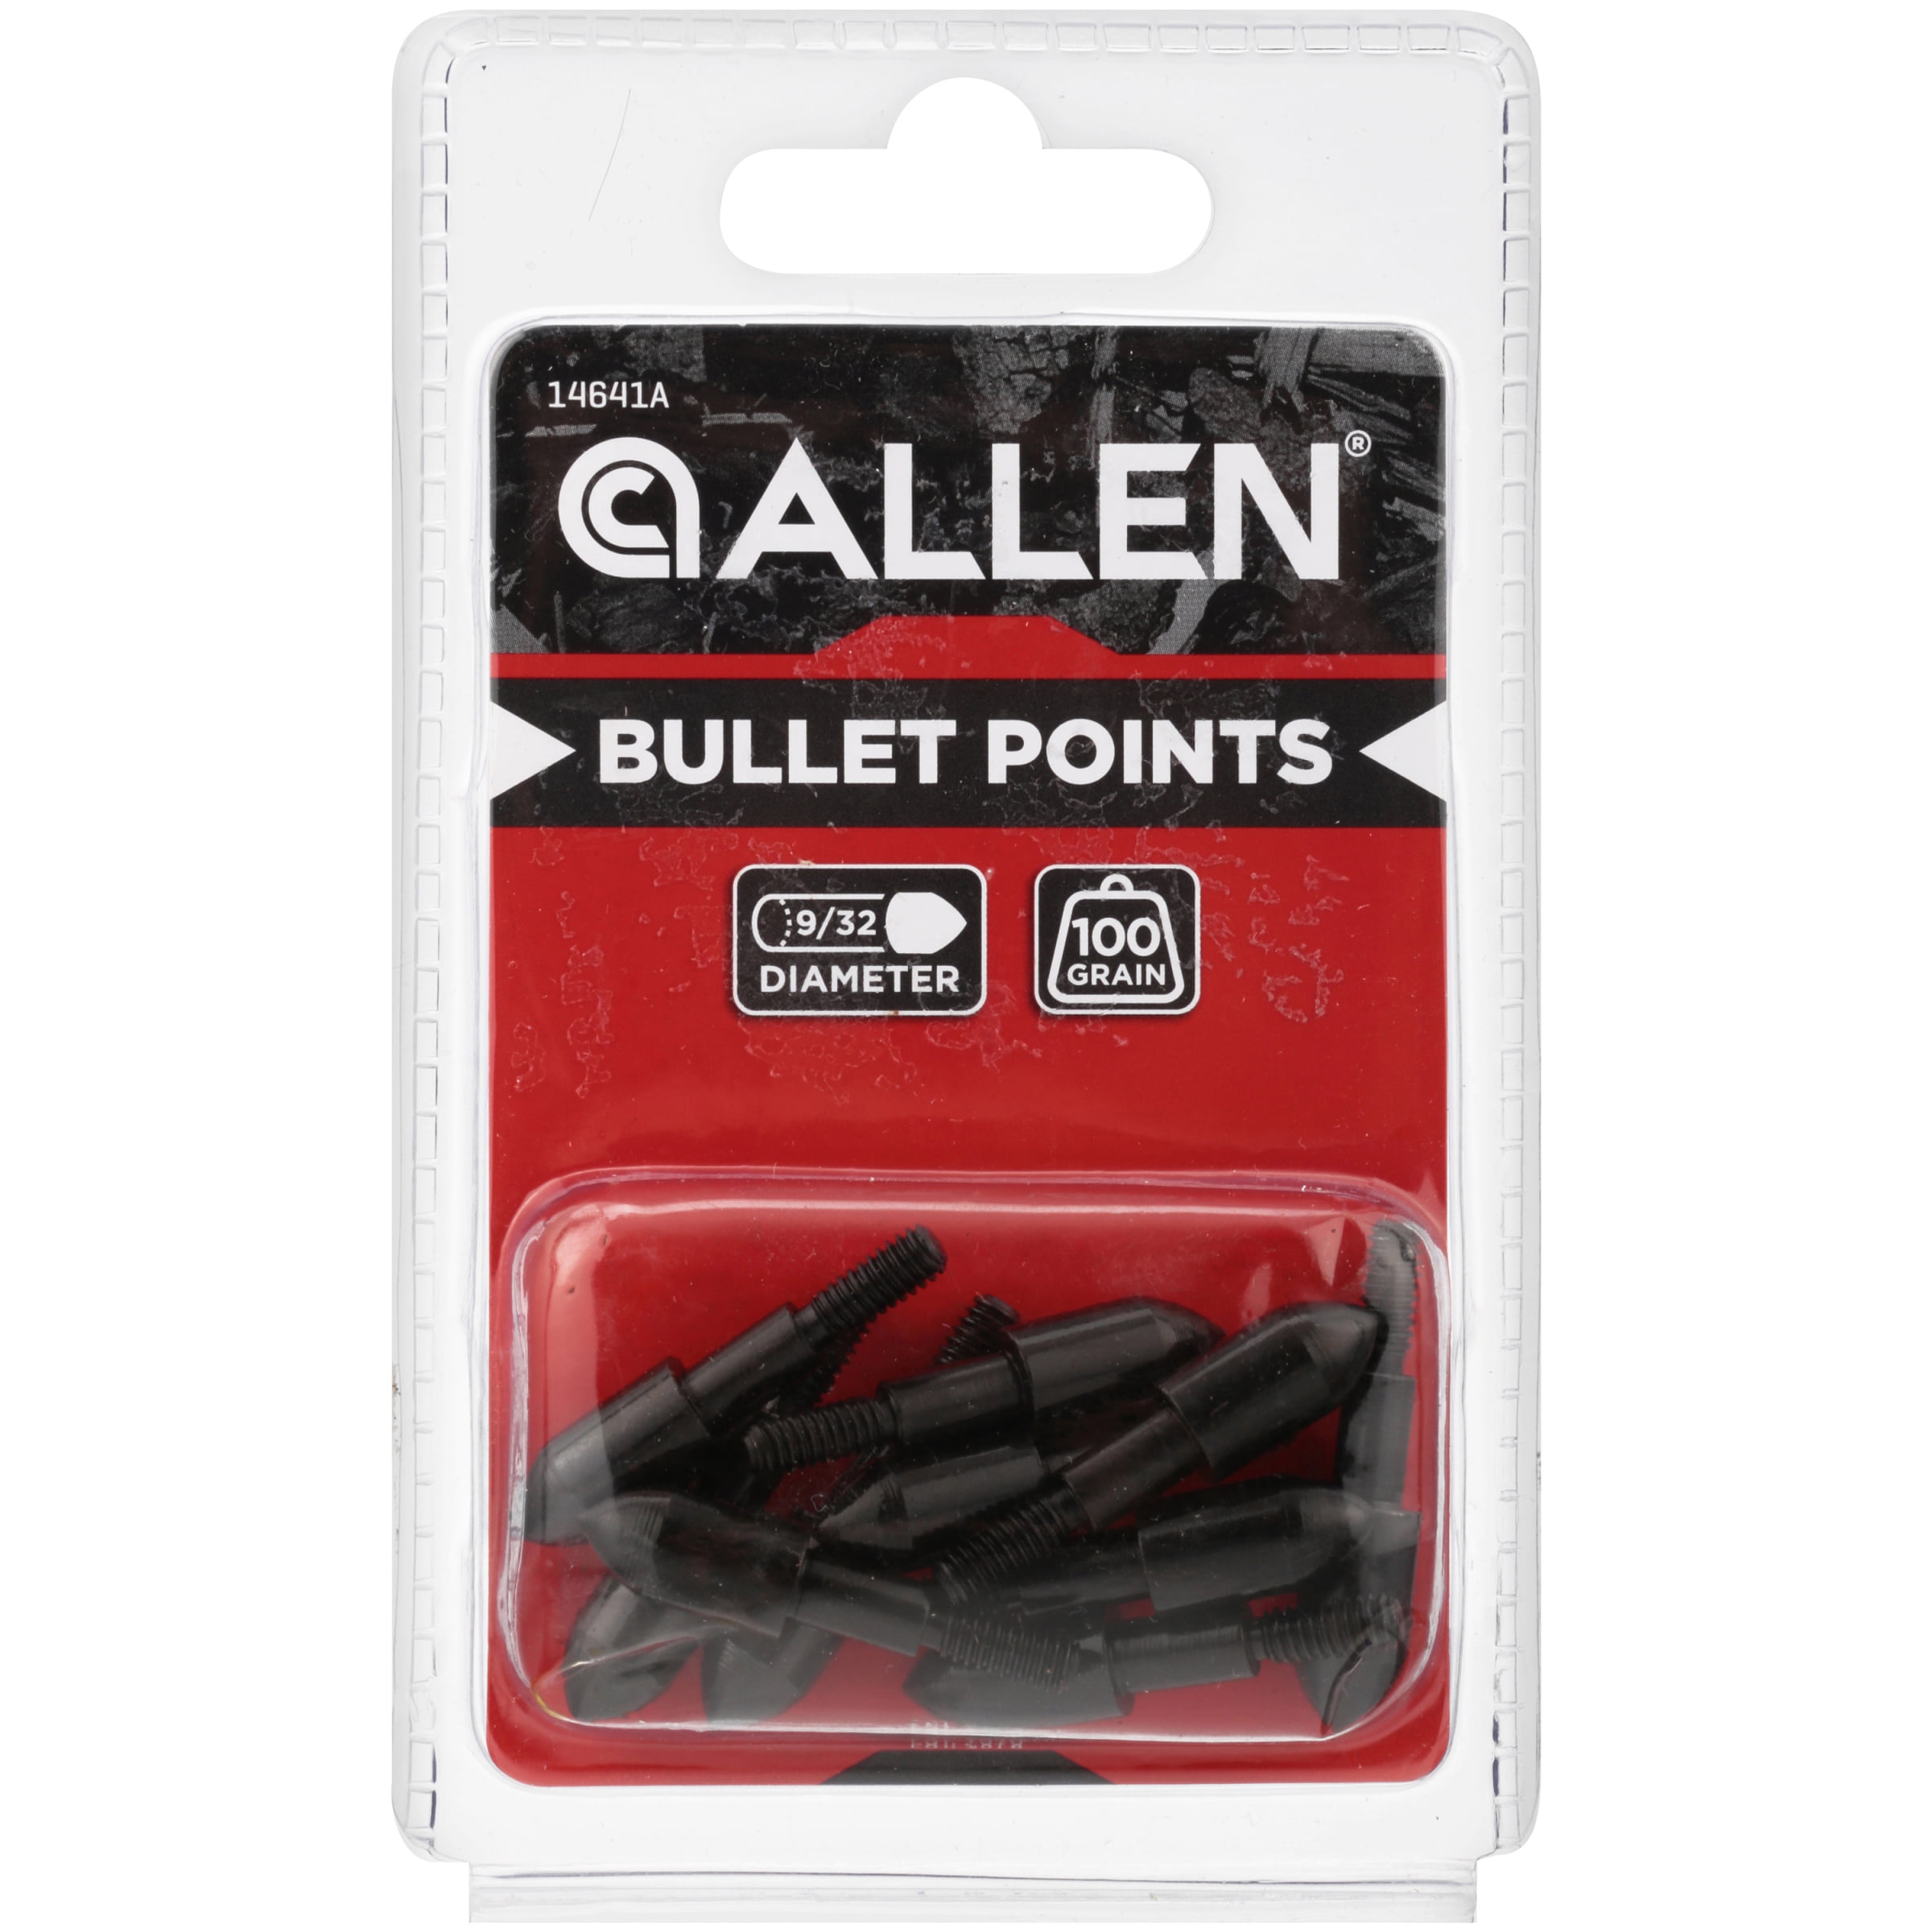 Allen Company Bullet Point 25 Piece 9/32" 75 Grain 44610 Archery Target Practice 